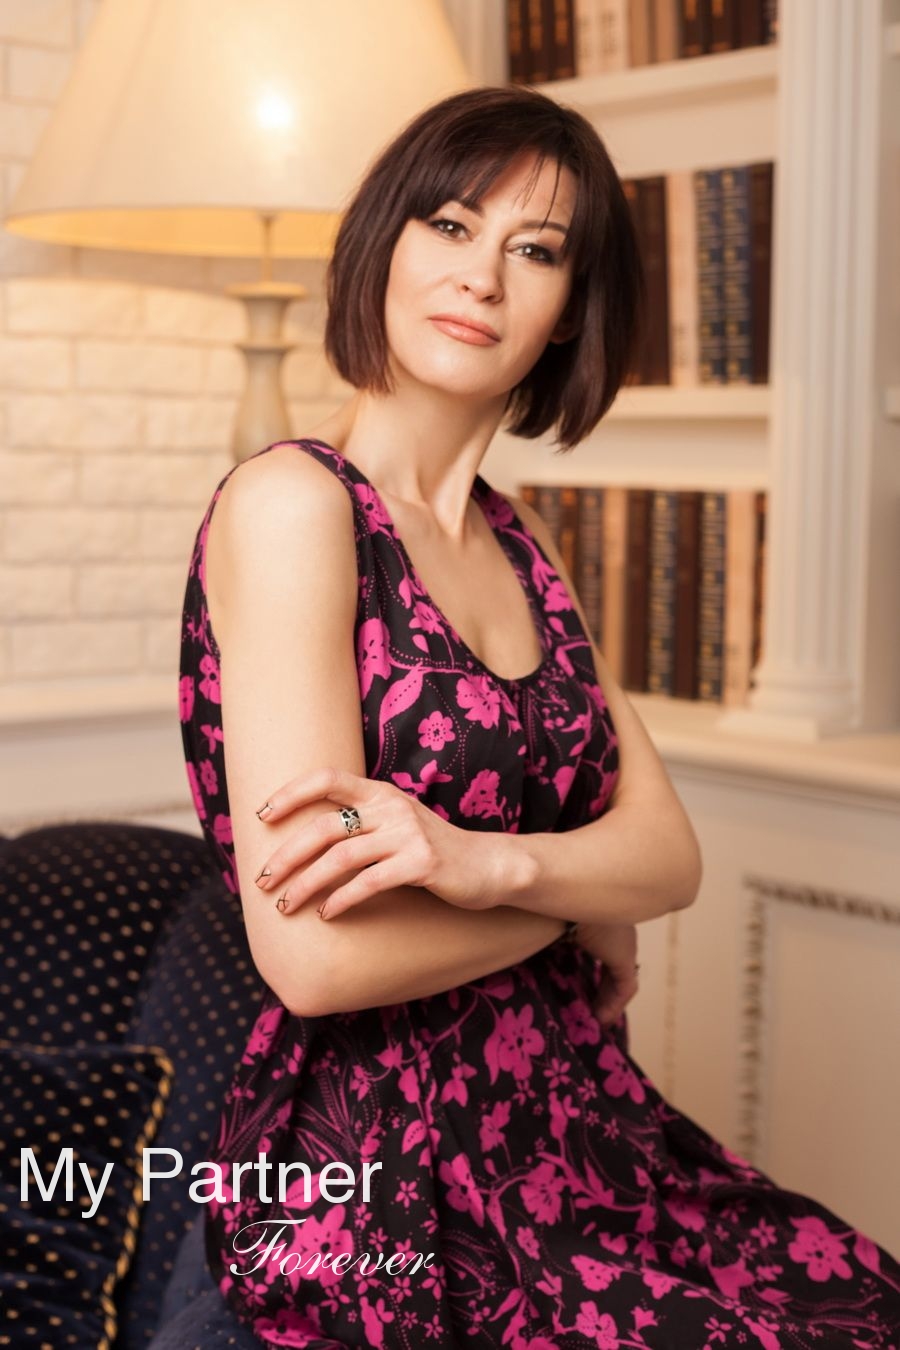 Dating Site to Meet Charming Ukrainian Woman Oksana from Kharkov, Ukraine